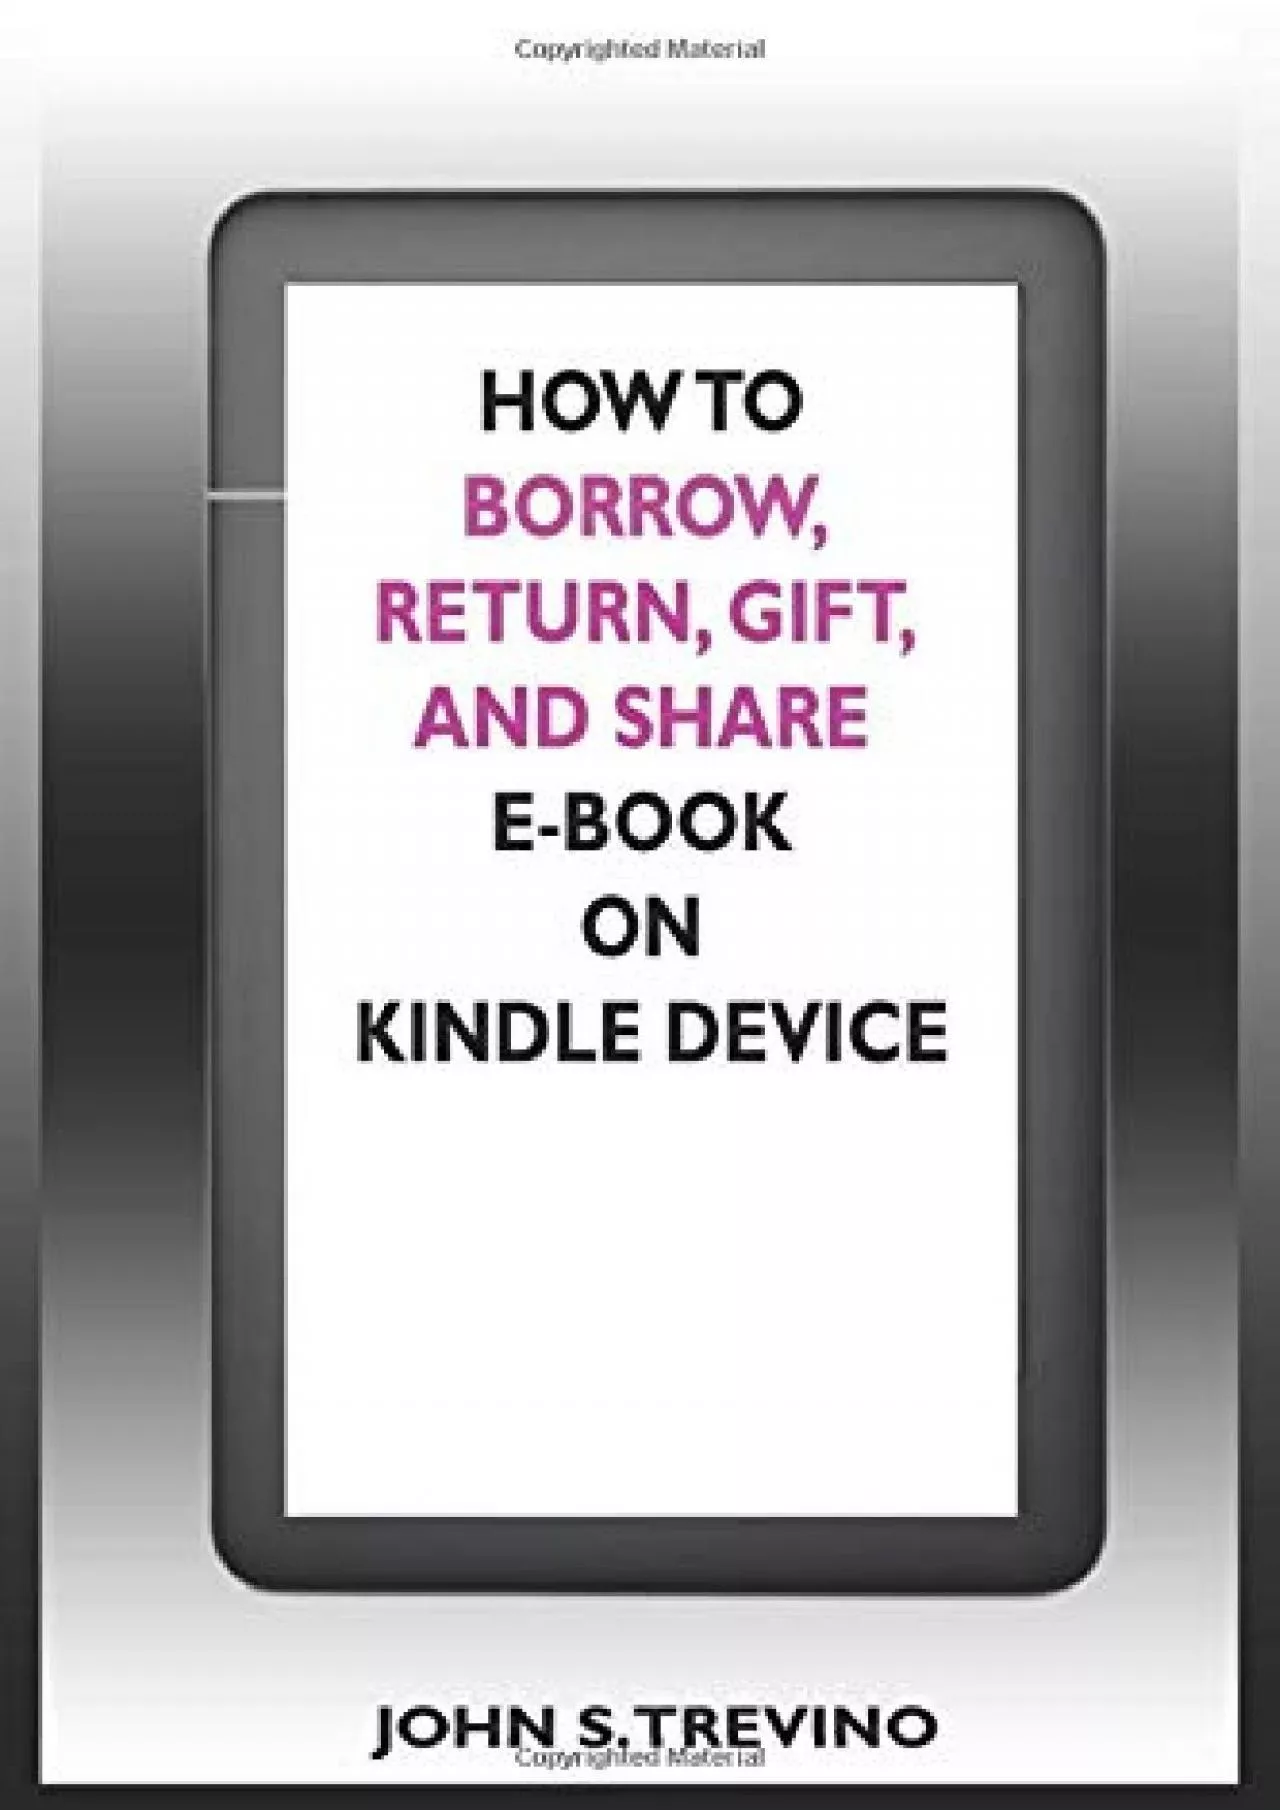 [DOWLOAD]-HOW TO BORROW, RETURN, GIFT, SHARE E-BOOK ON KINDLE DEVICE: A Complete Step